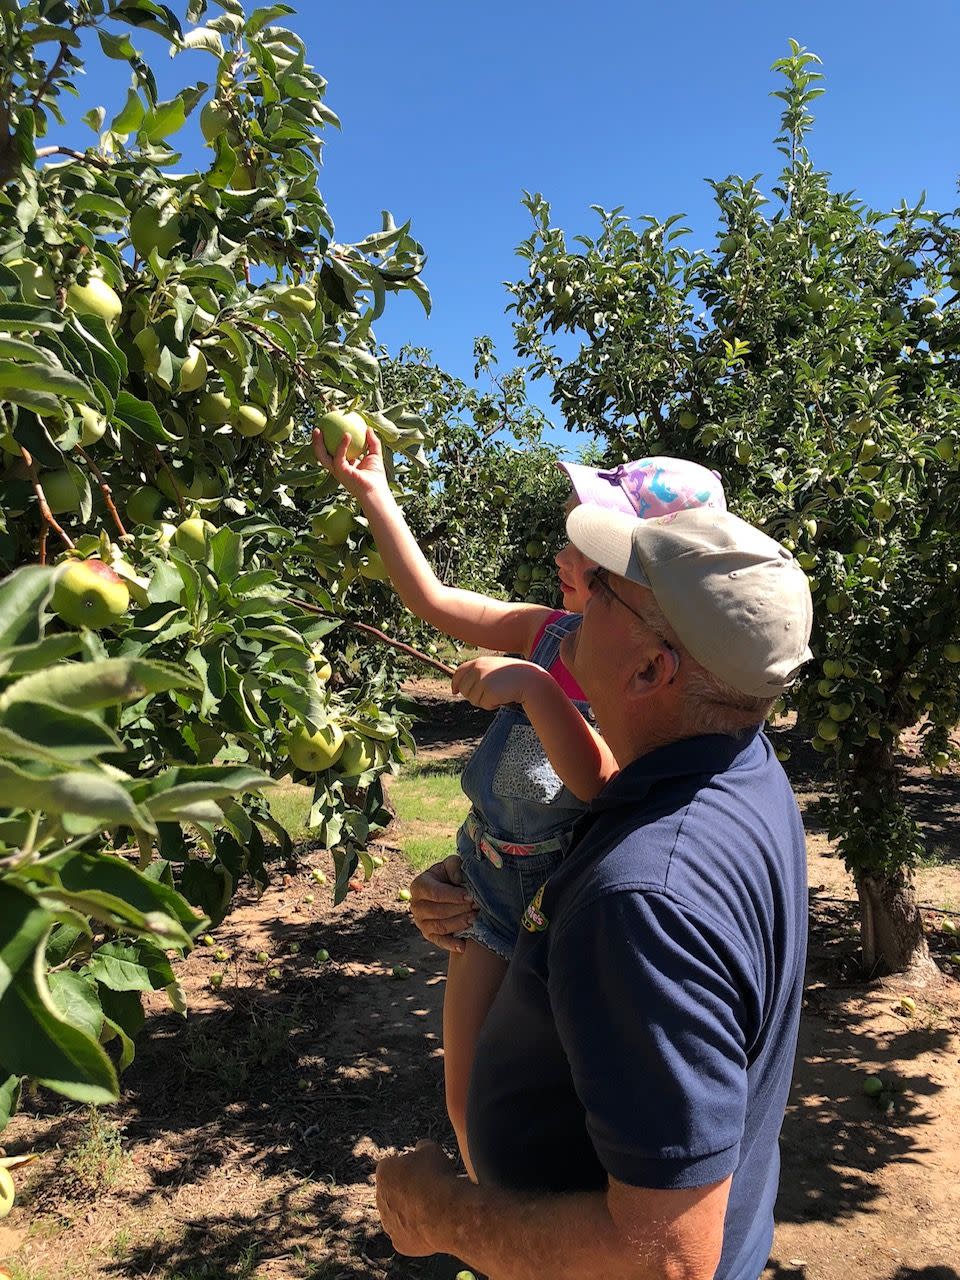 17) Apple Annie's Orchard in Wilcox, Arizona